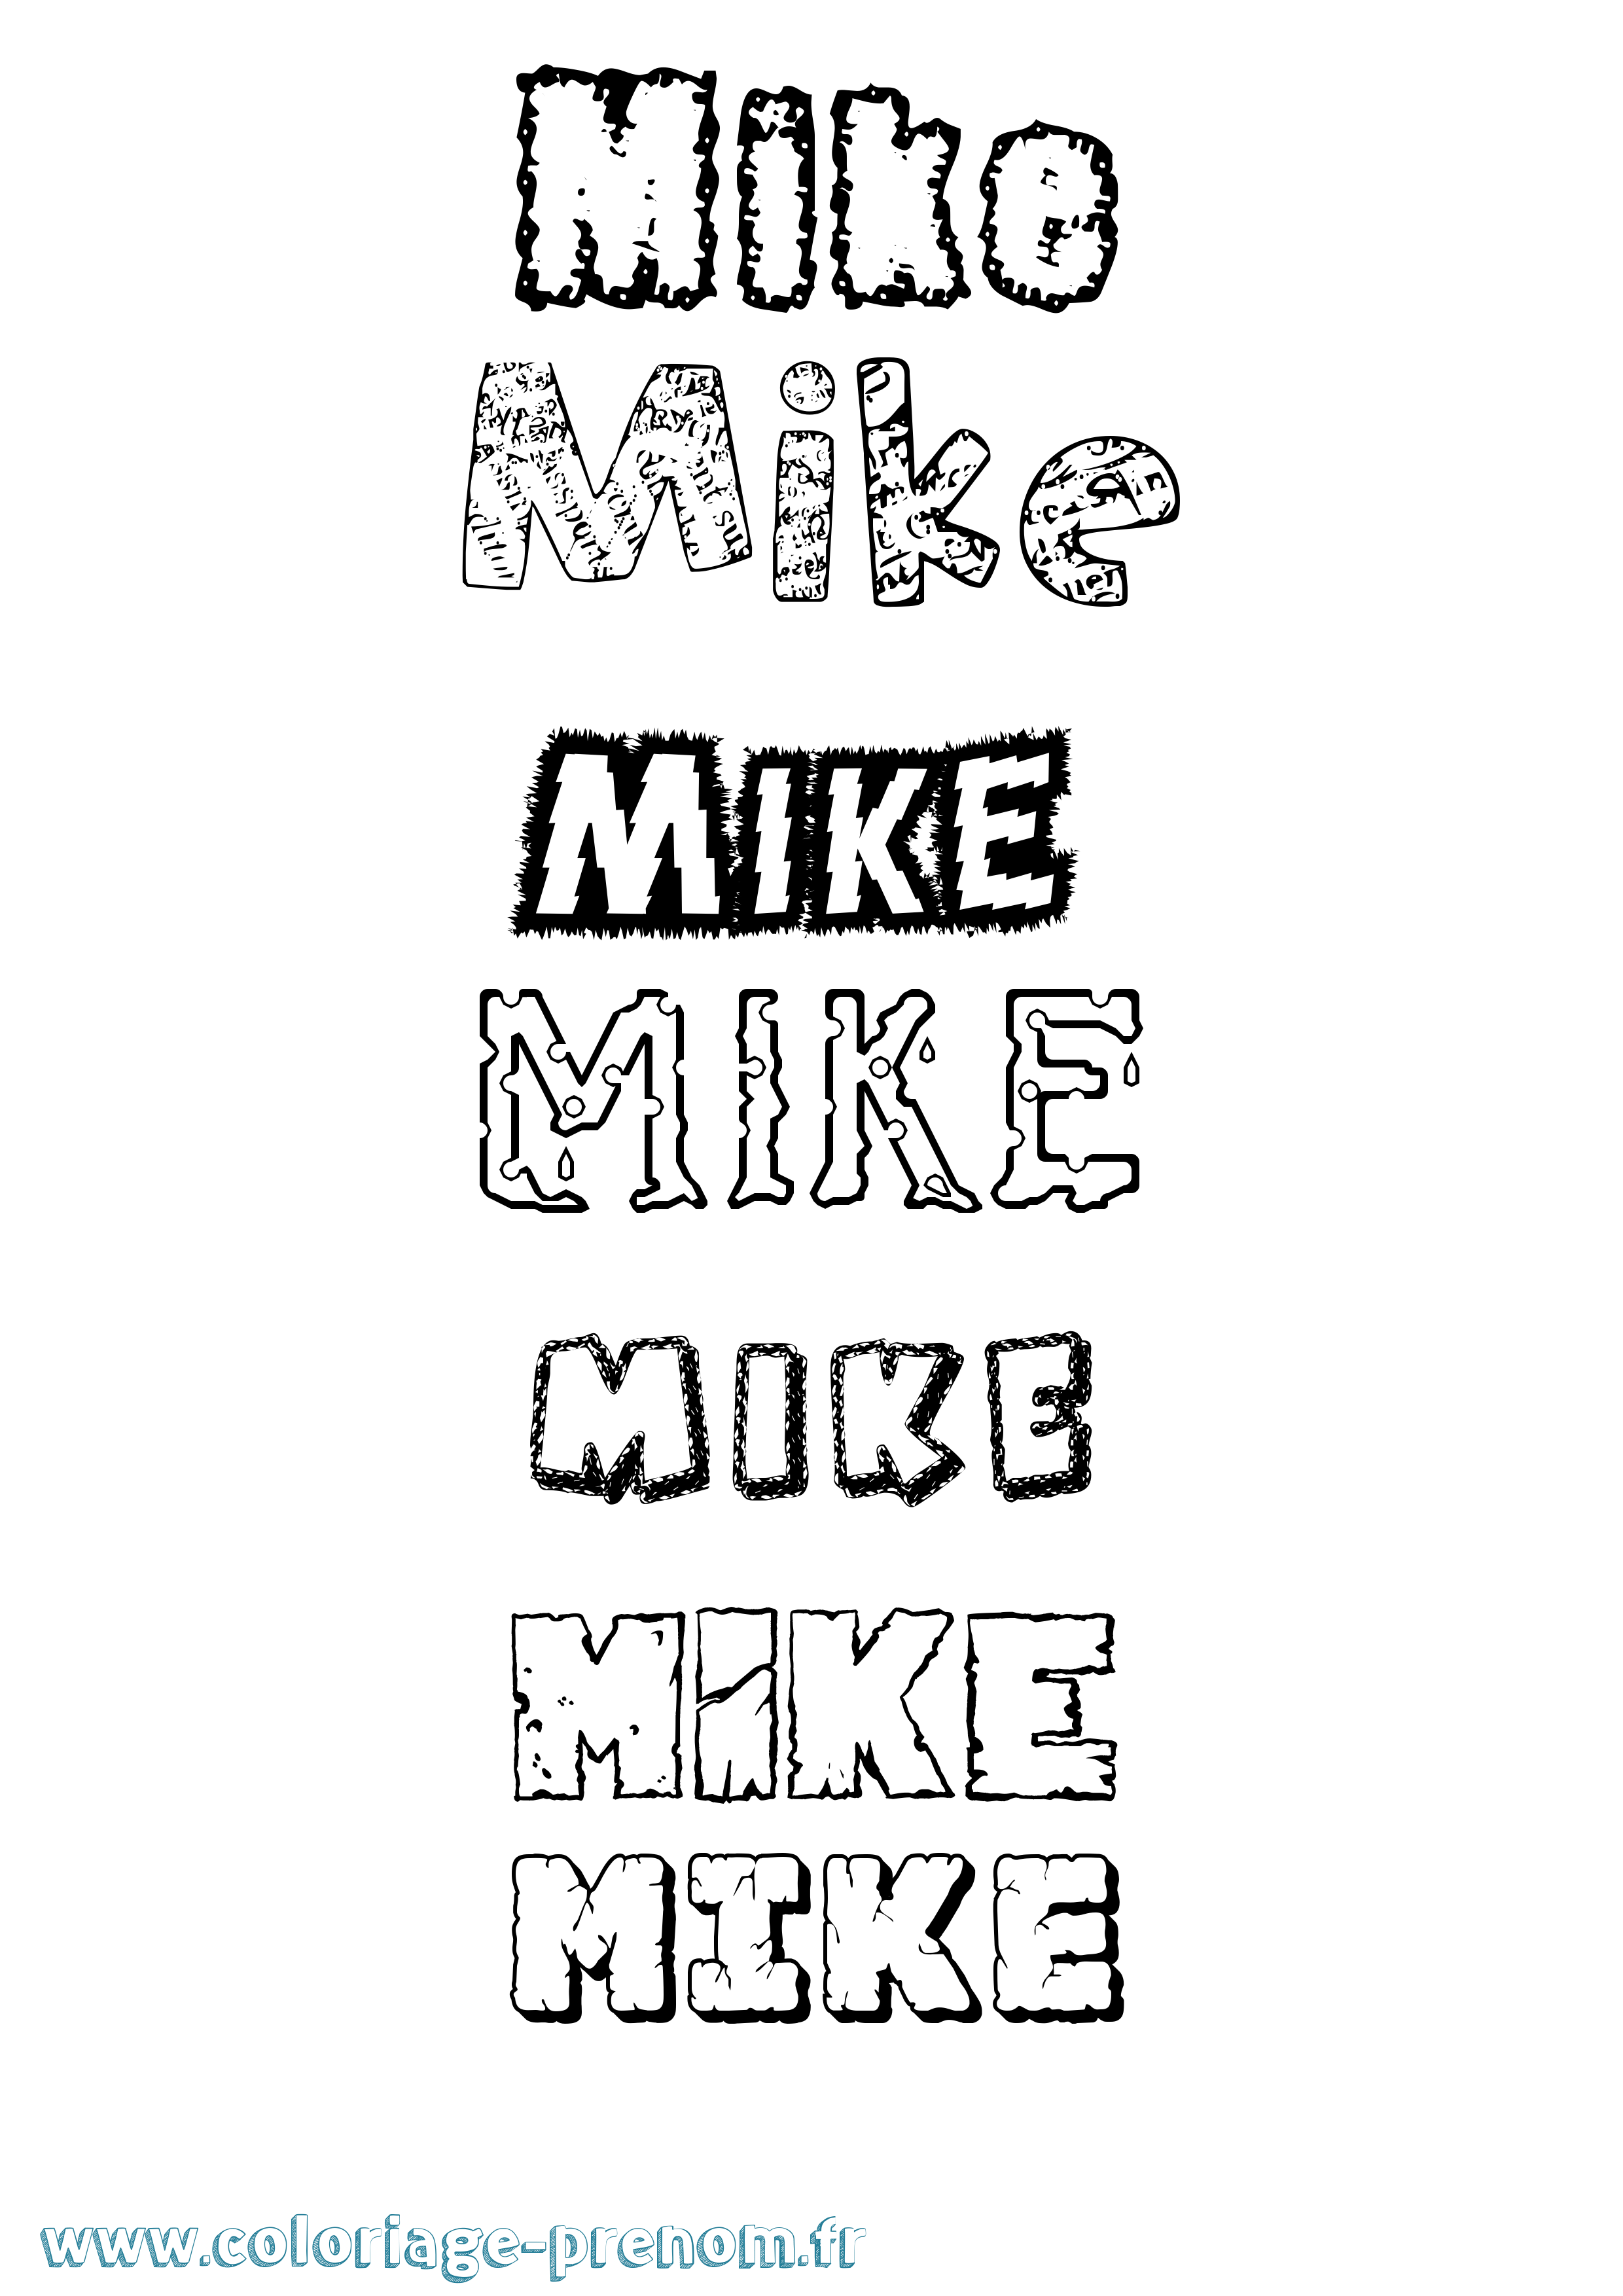 Coloriage prénom Mike